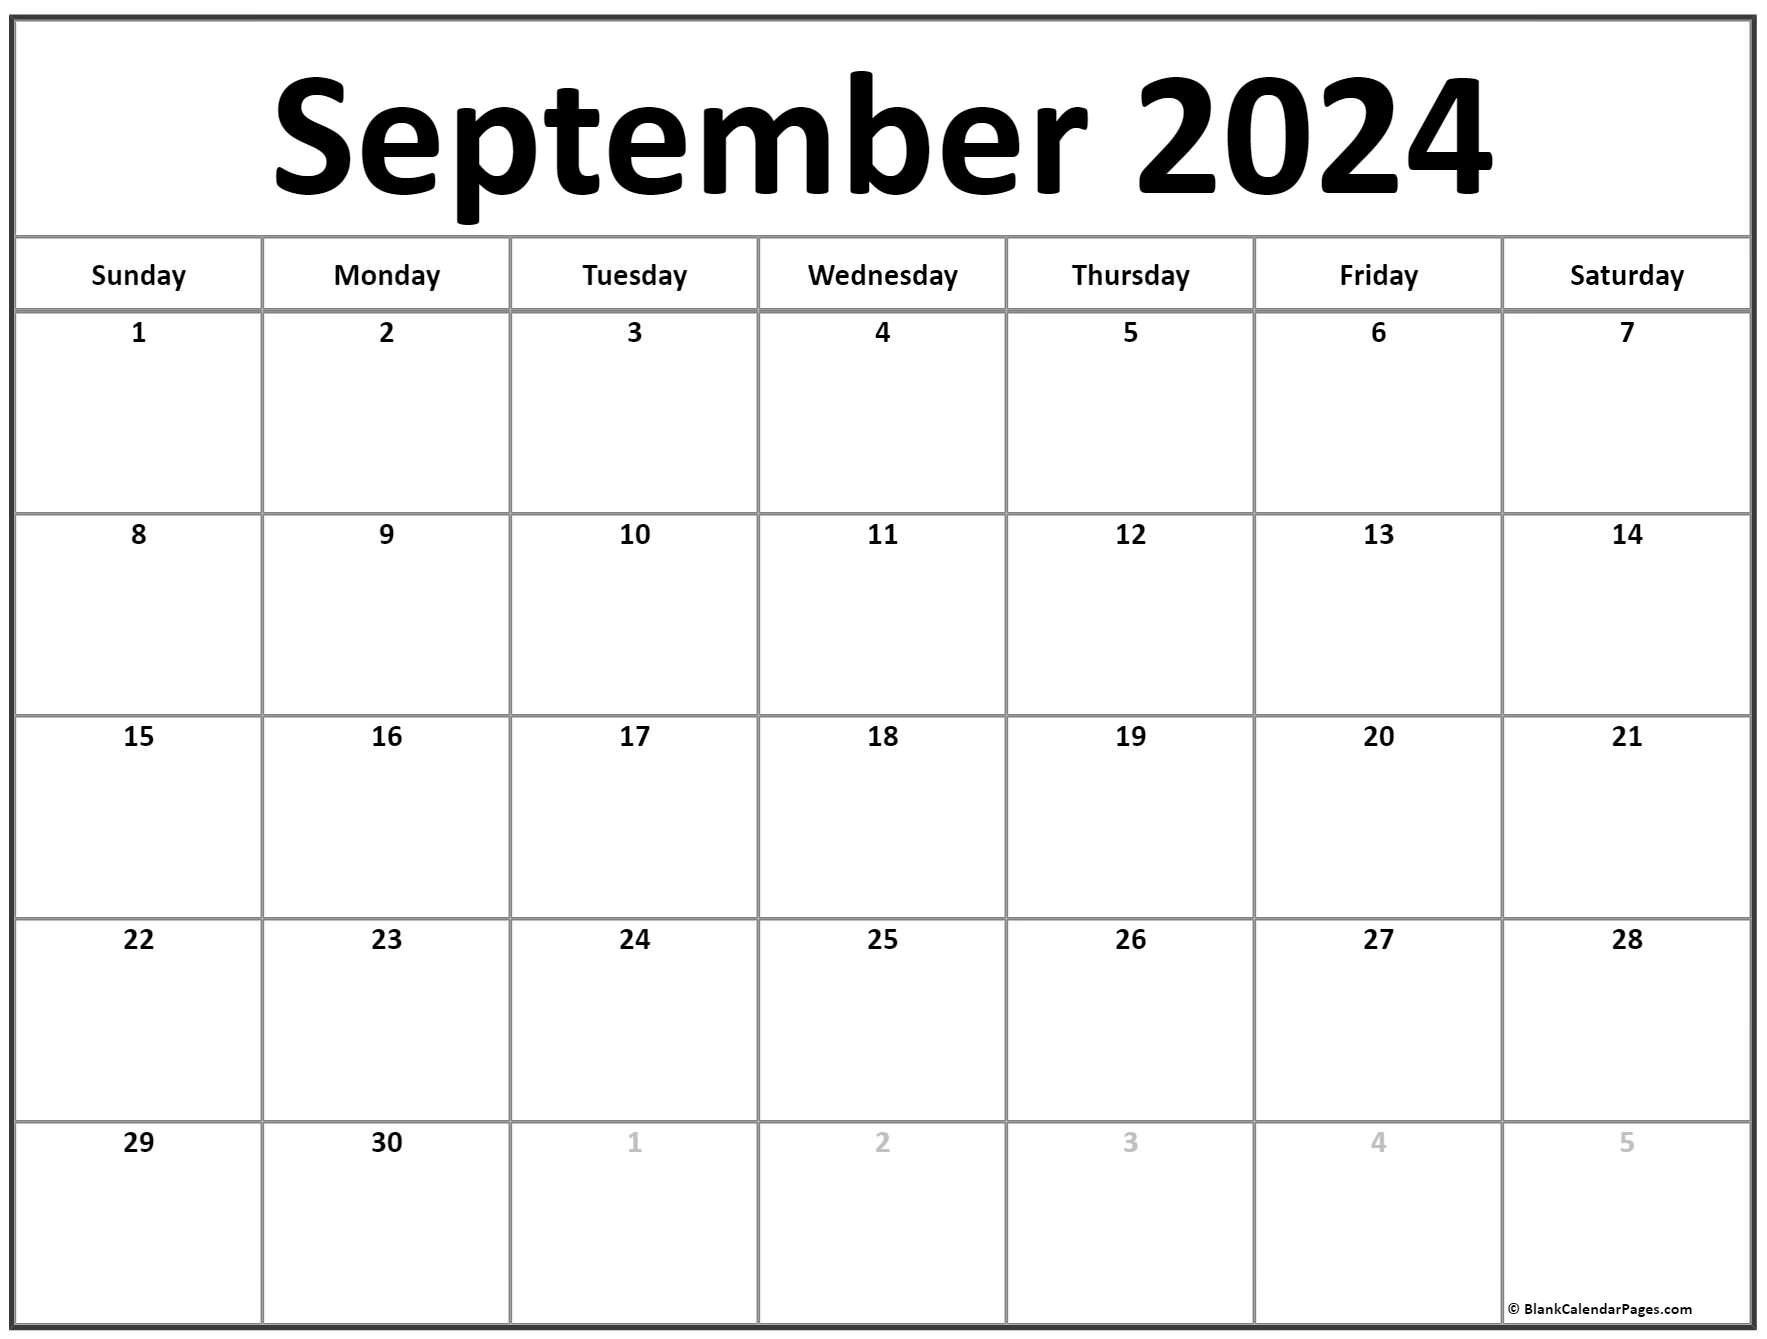 Sep Calendar 2022 September 2022 Calendar | Free Printable Calendar Templates